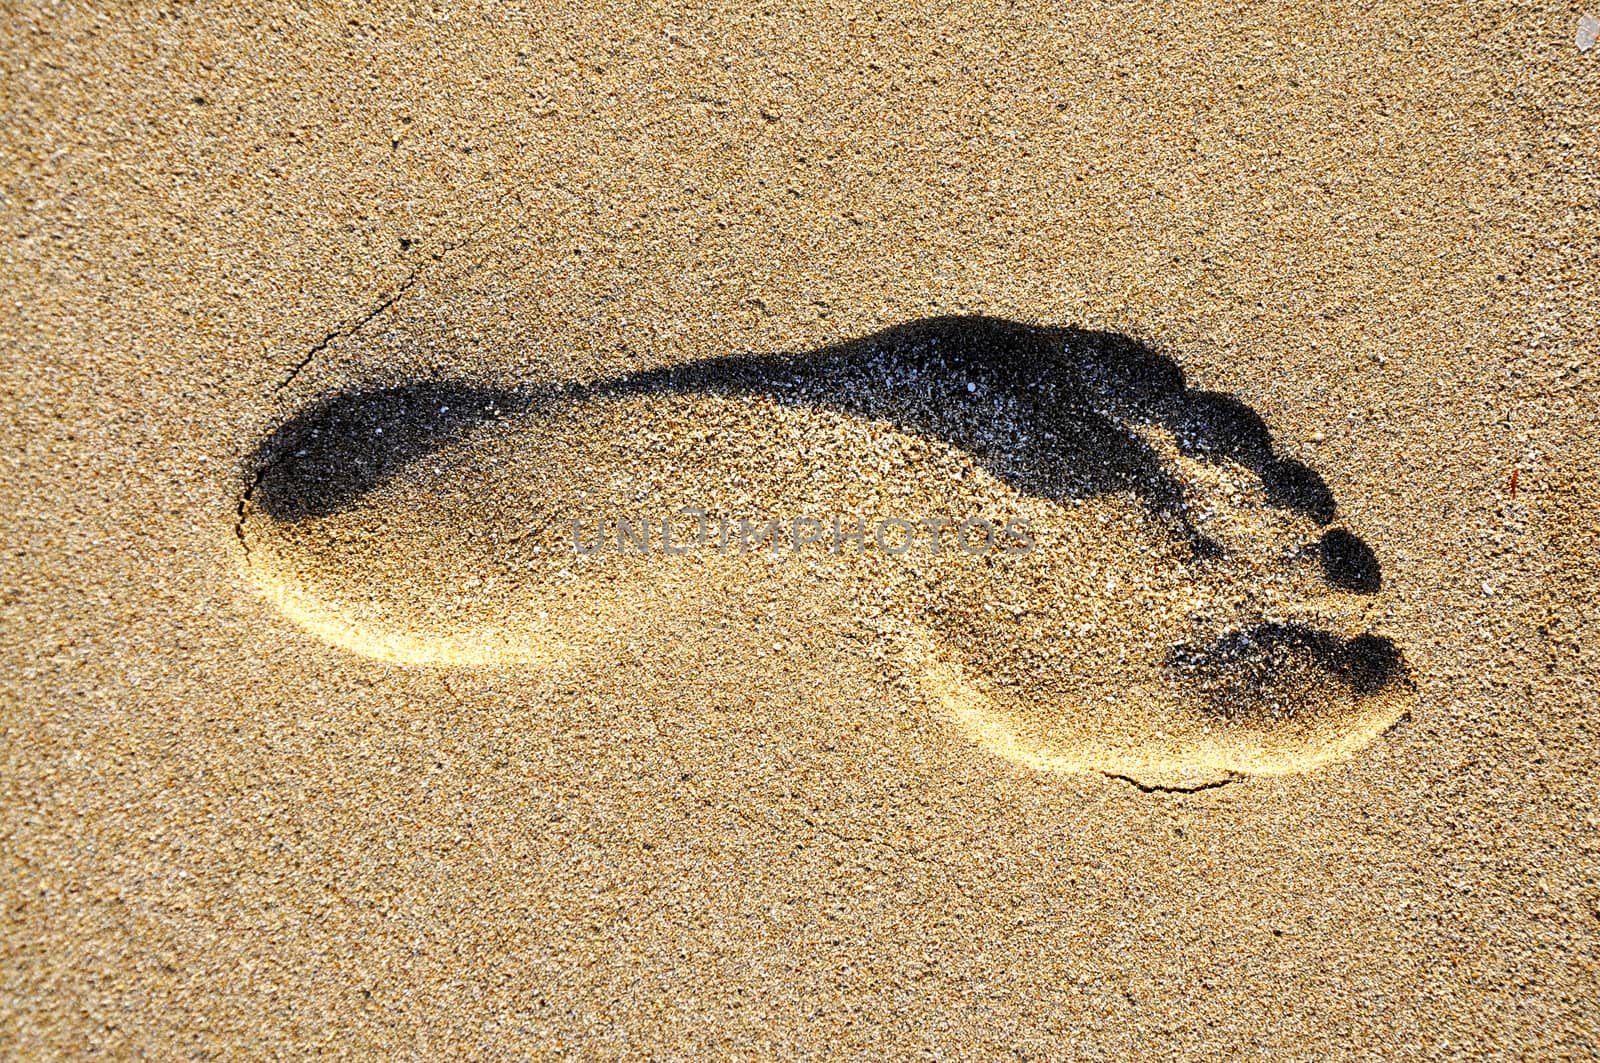 Sandy beach, waves, walking on the beach, footprints in the sand.